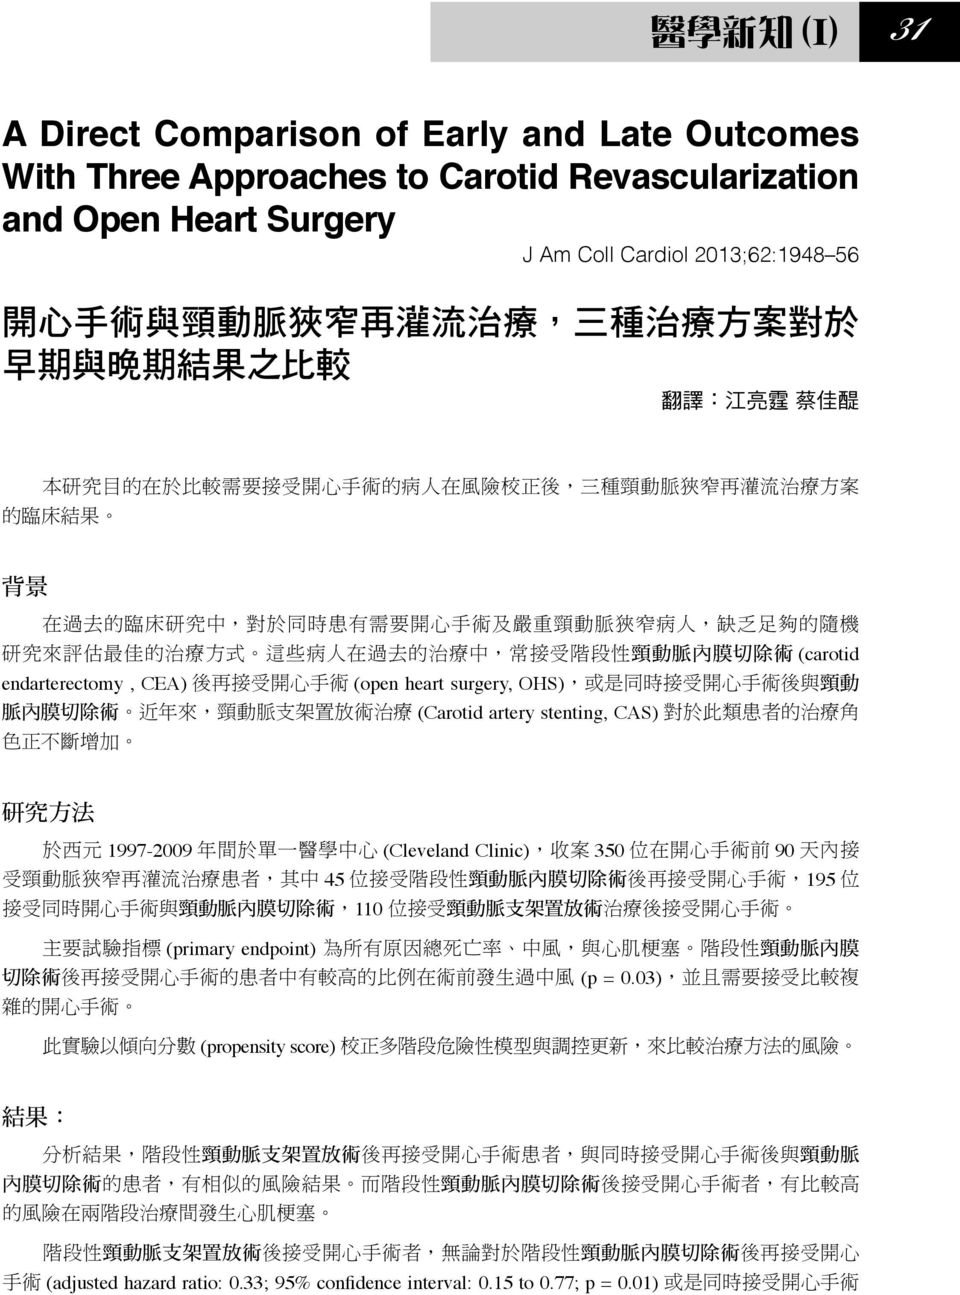 endarterectomy, CEA) (open heart surgery, OHS) (Carotid artery stenting, CAS) 1997-2009 (Cleveland Clinic) 350 90 45 195 110